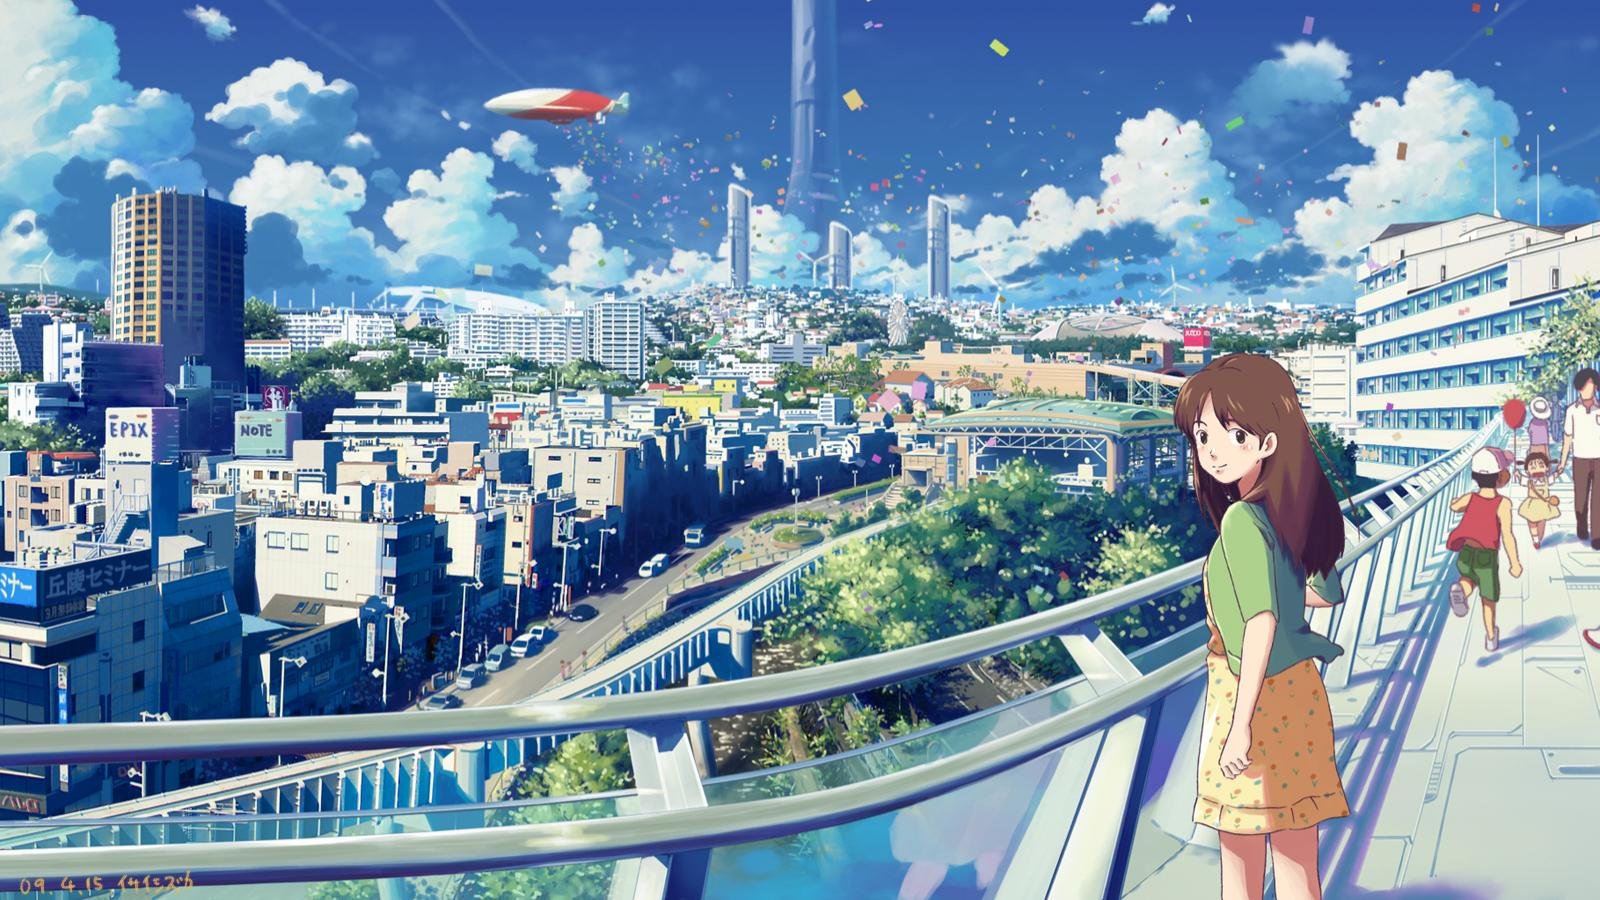 26+] Anime City Spring Wallpapers - WallpaperSafari